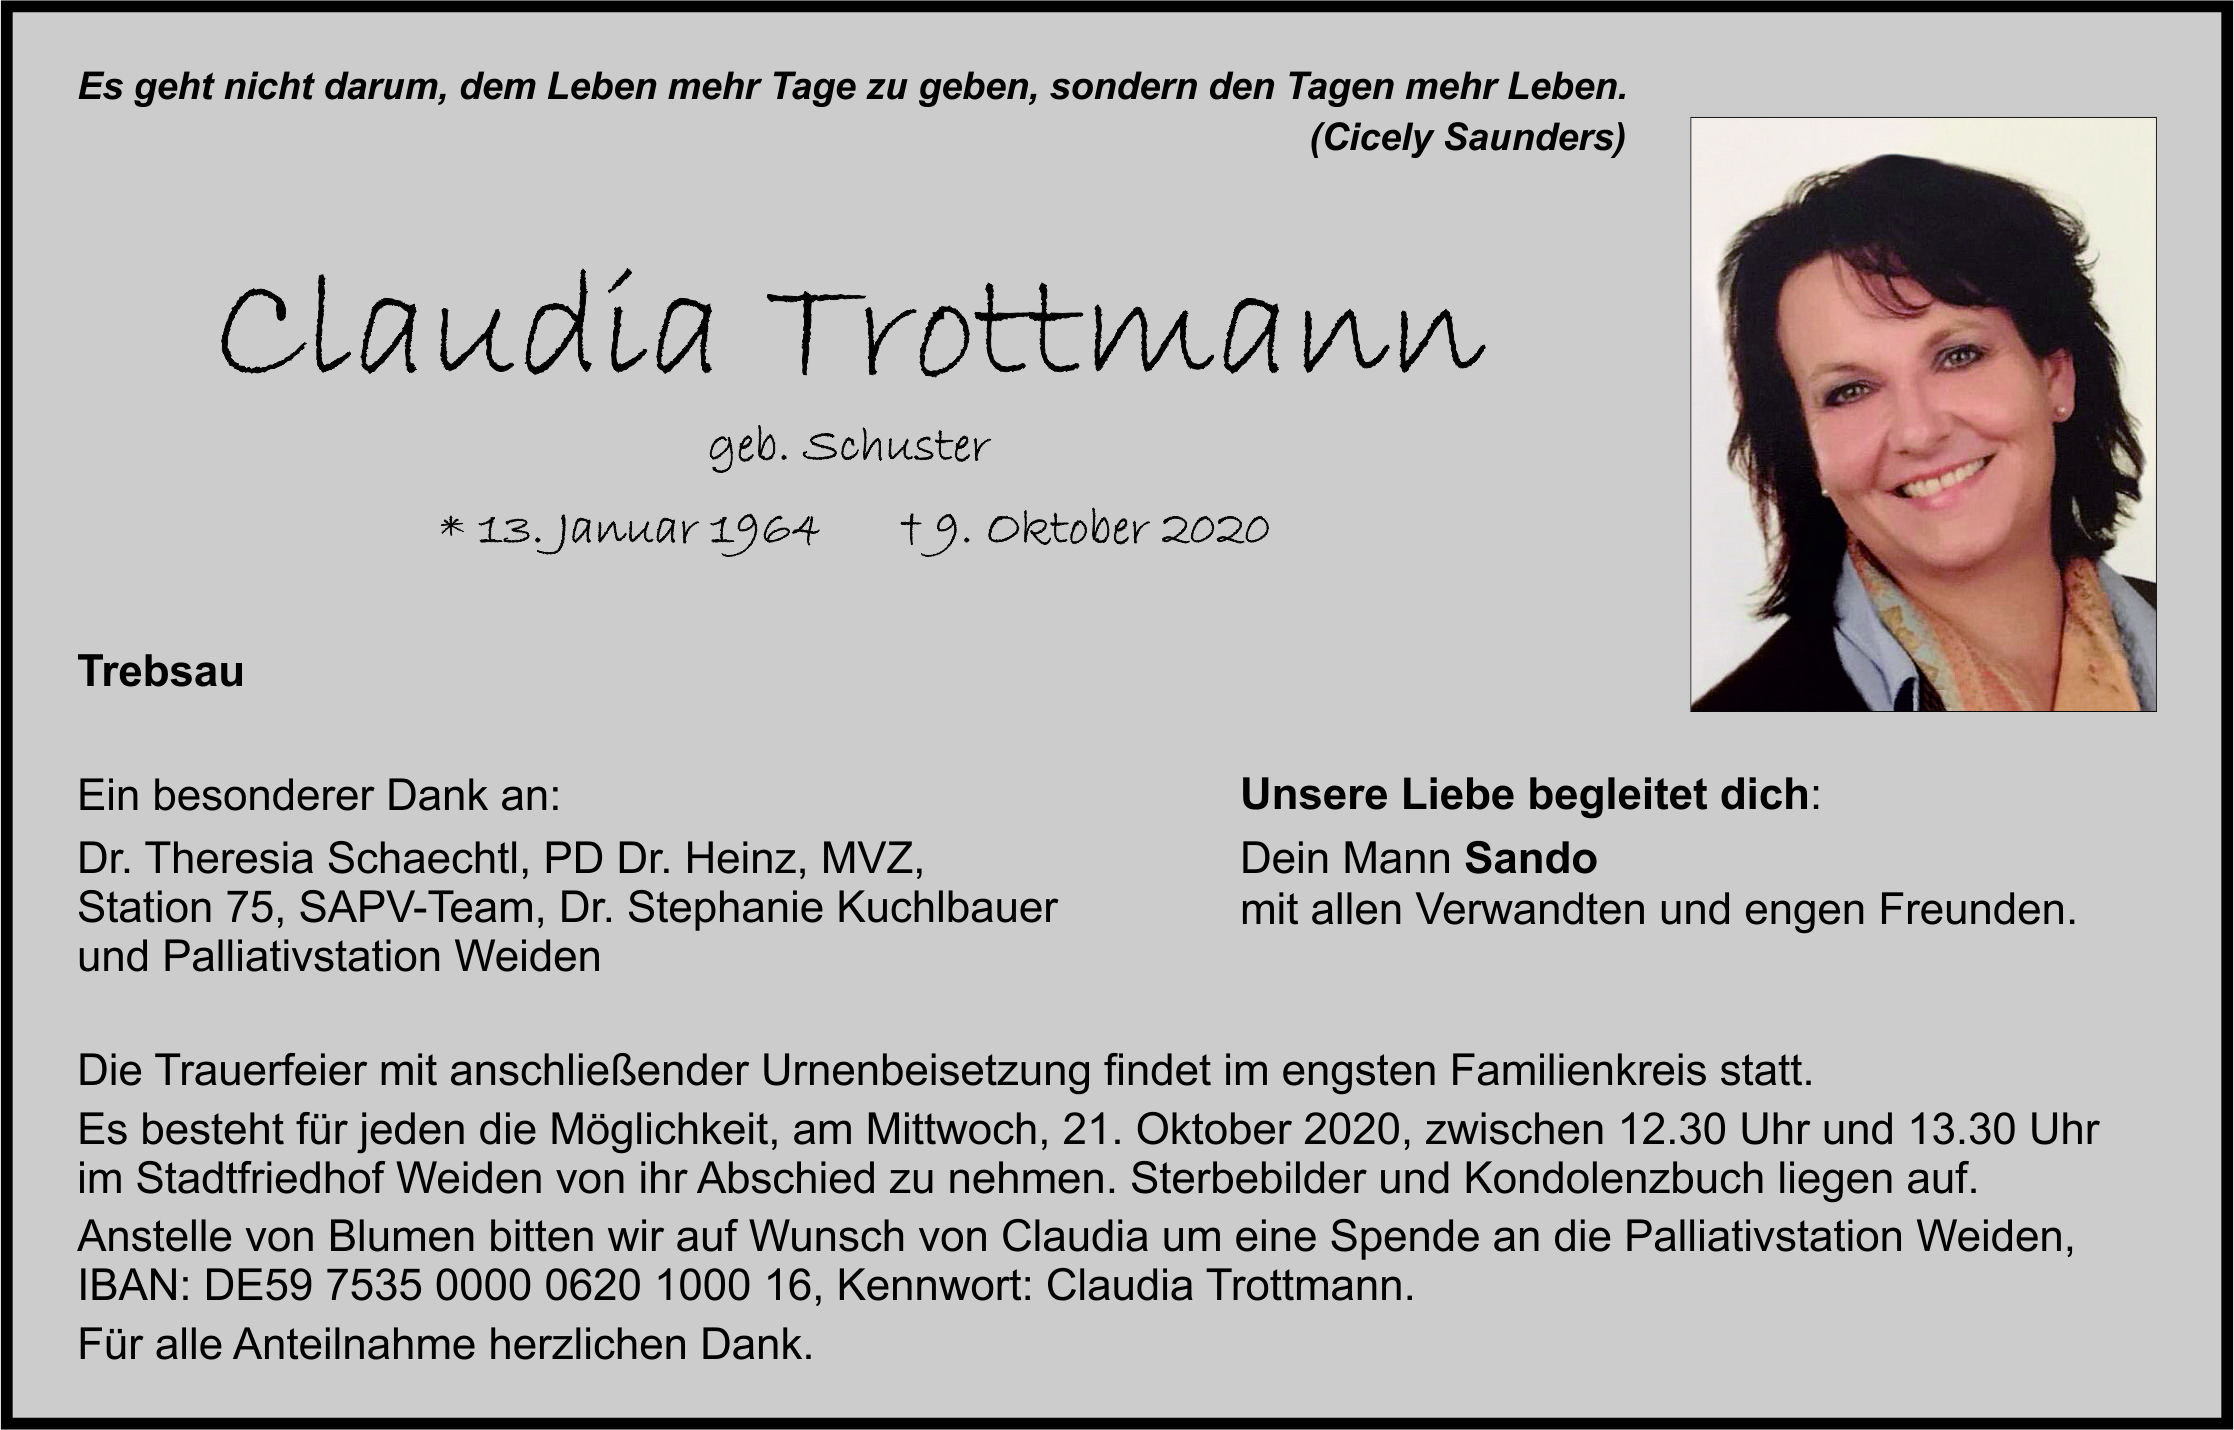 Traueranzeige Claudia Trottmann, Trebsau(1)